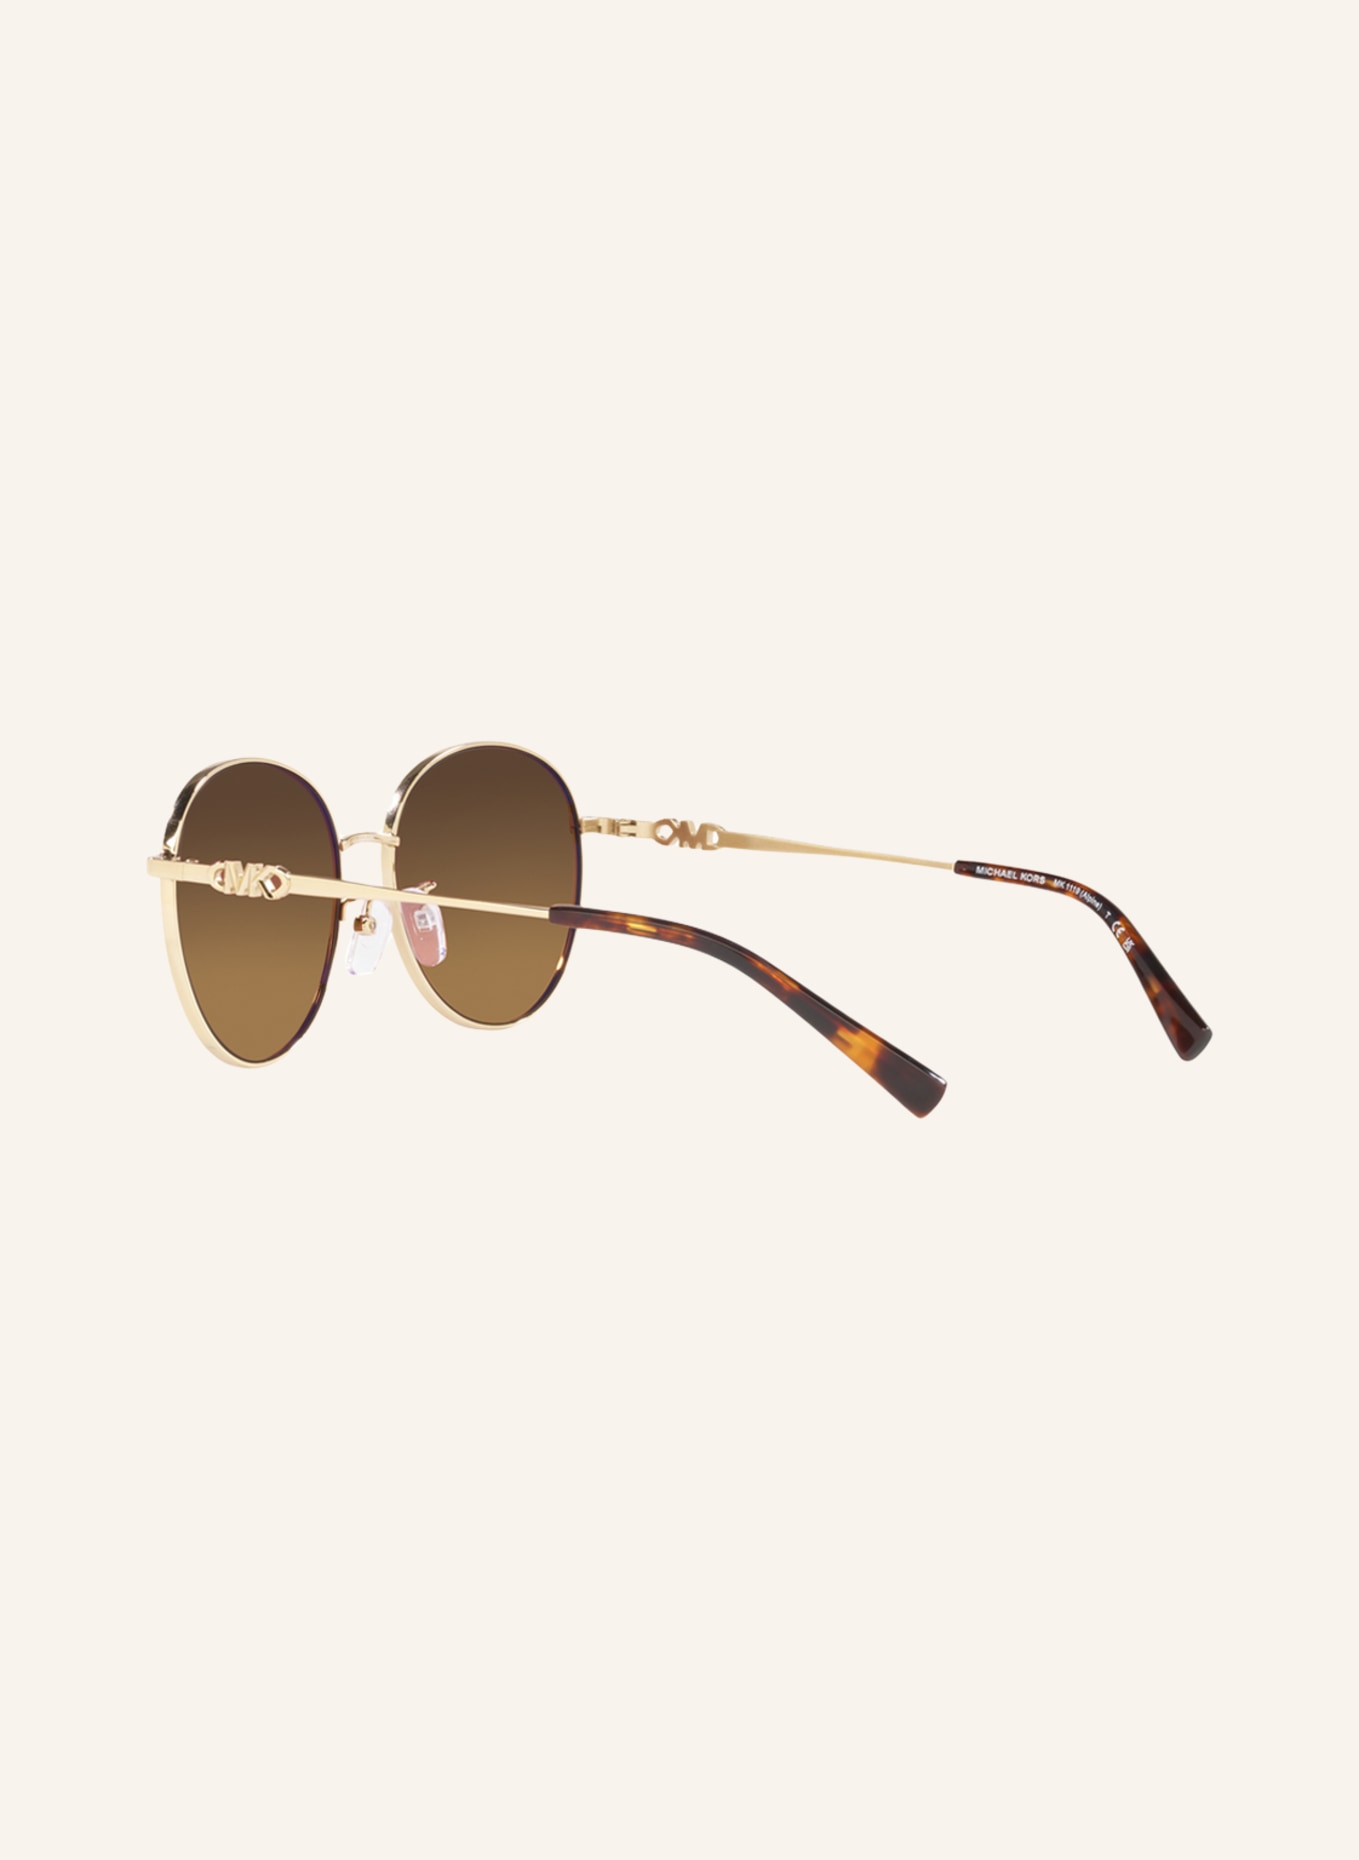 MICHAEL KORS Sonnenbrille MK1119, Farbe: 101484 - GOLD/ BRAUN POLARISIERT (Bild 4)